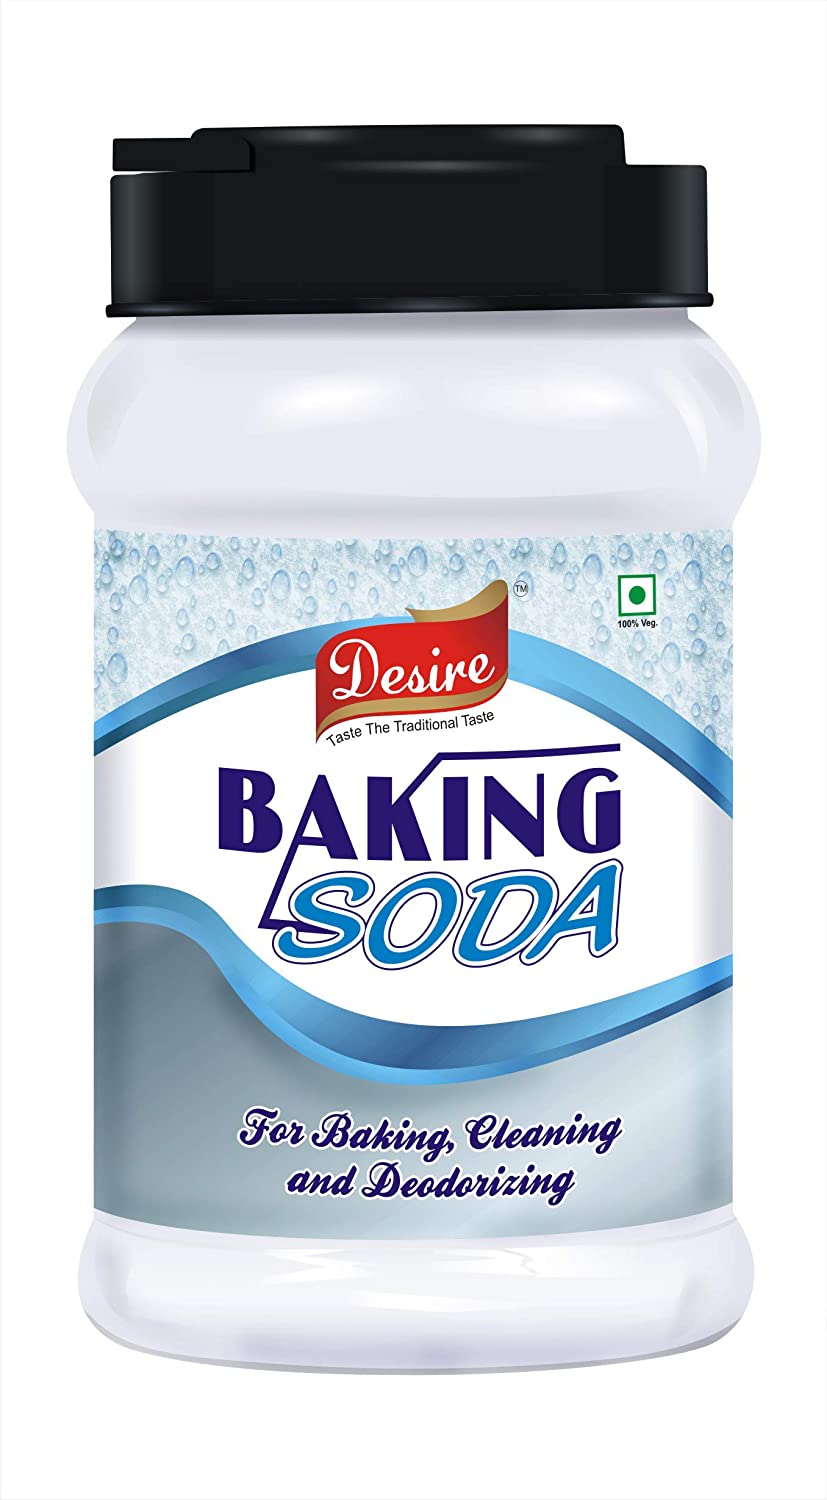 Desire Baking Soda Jar Image